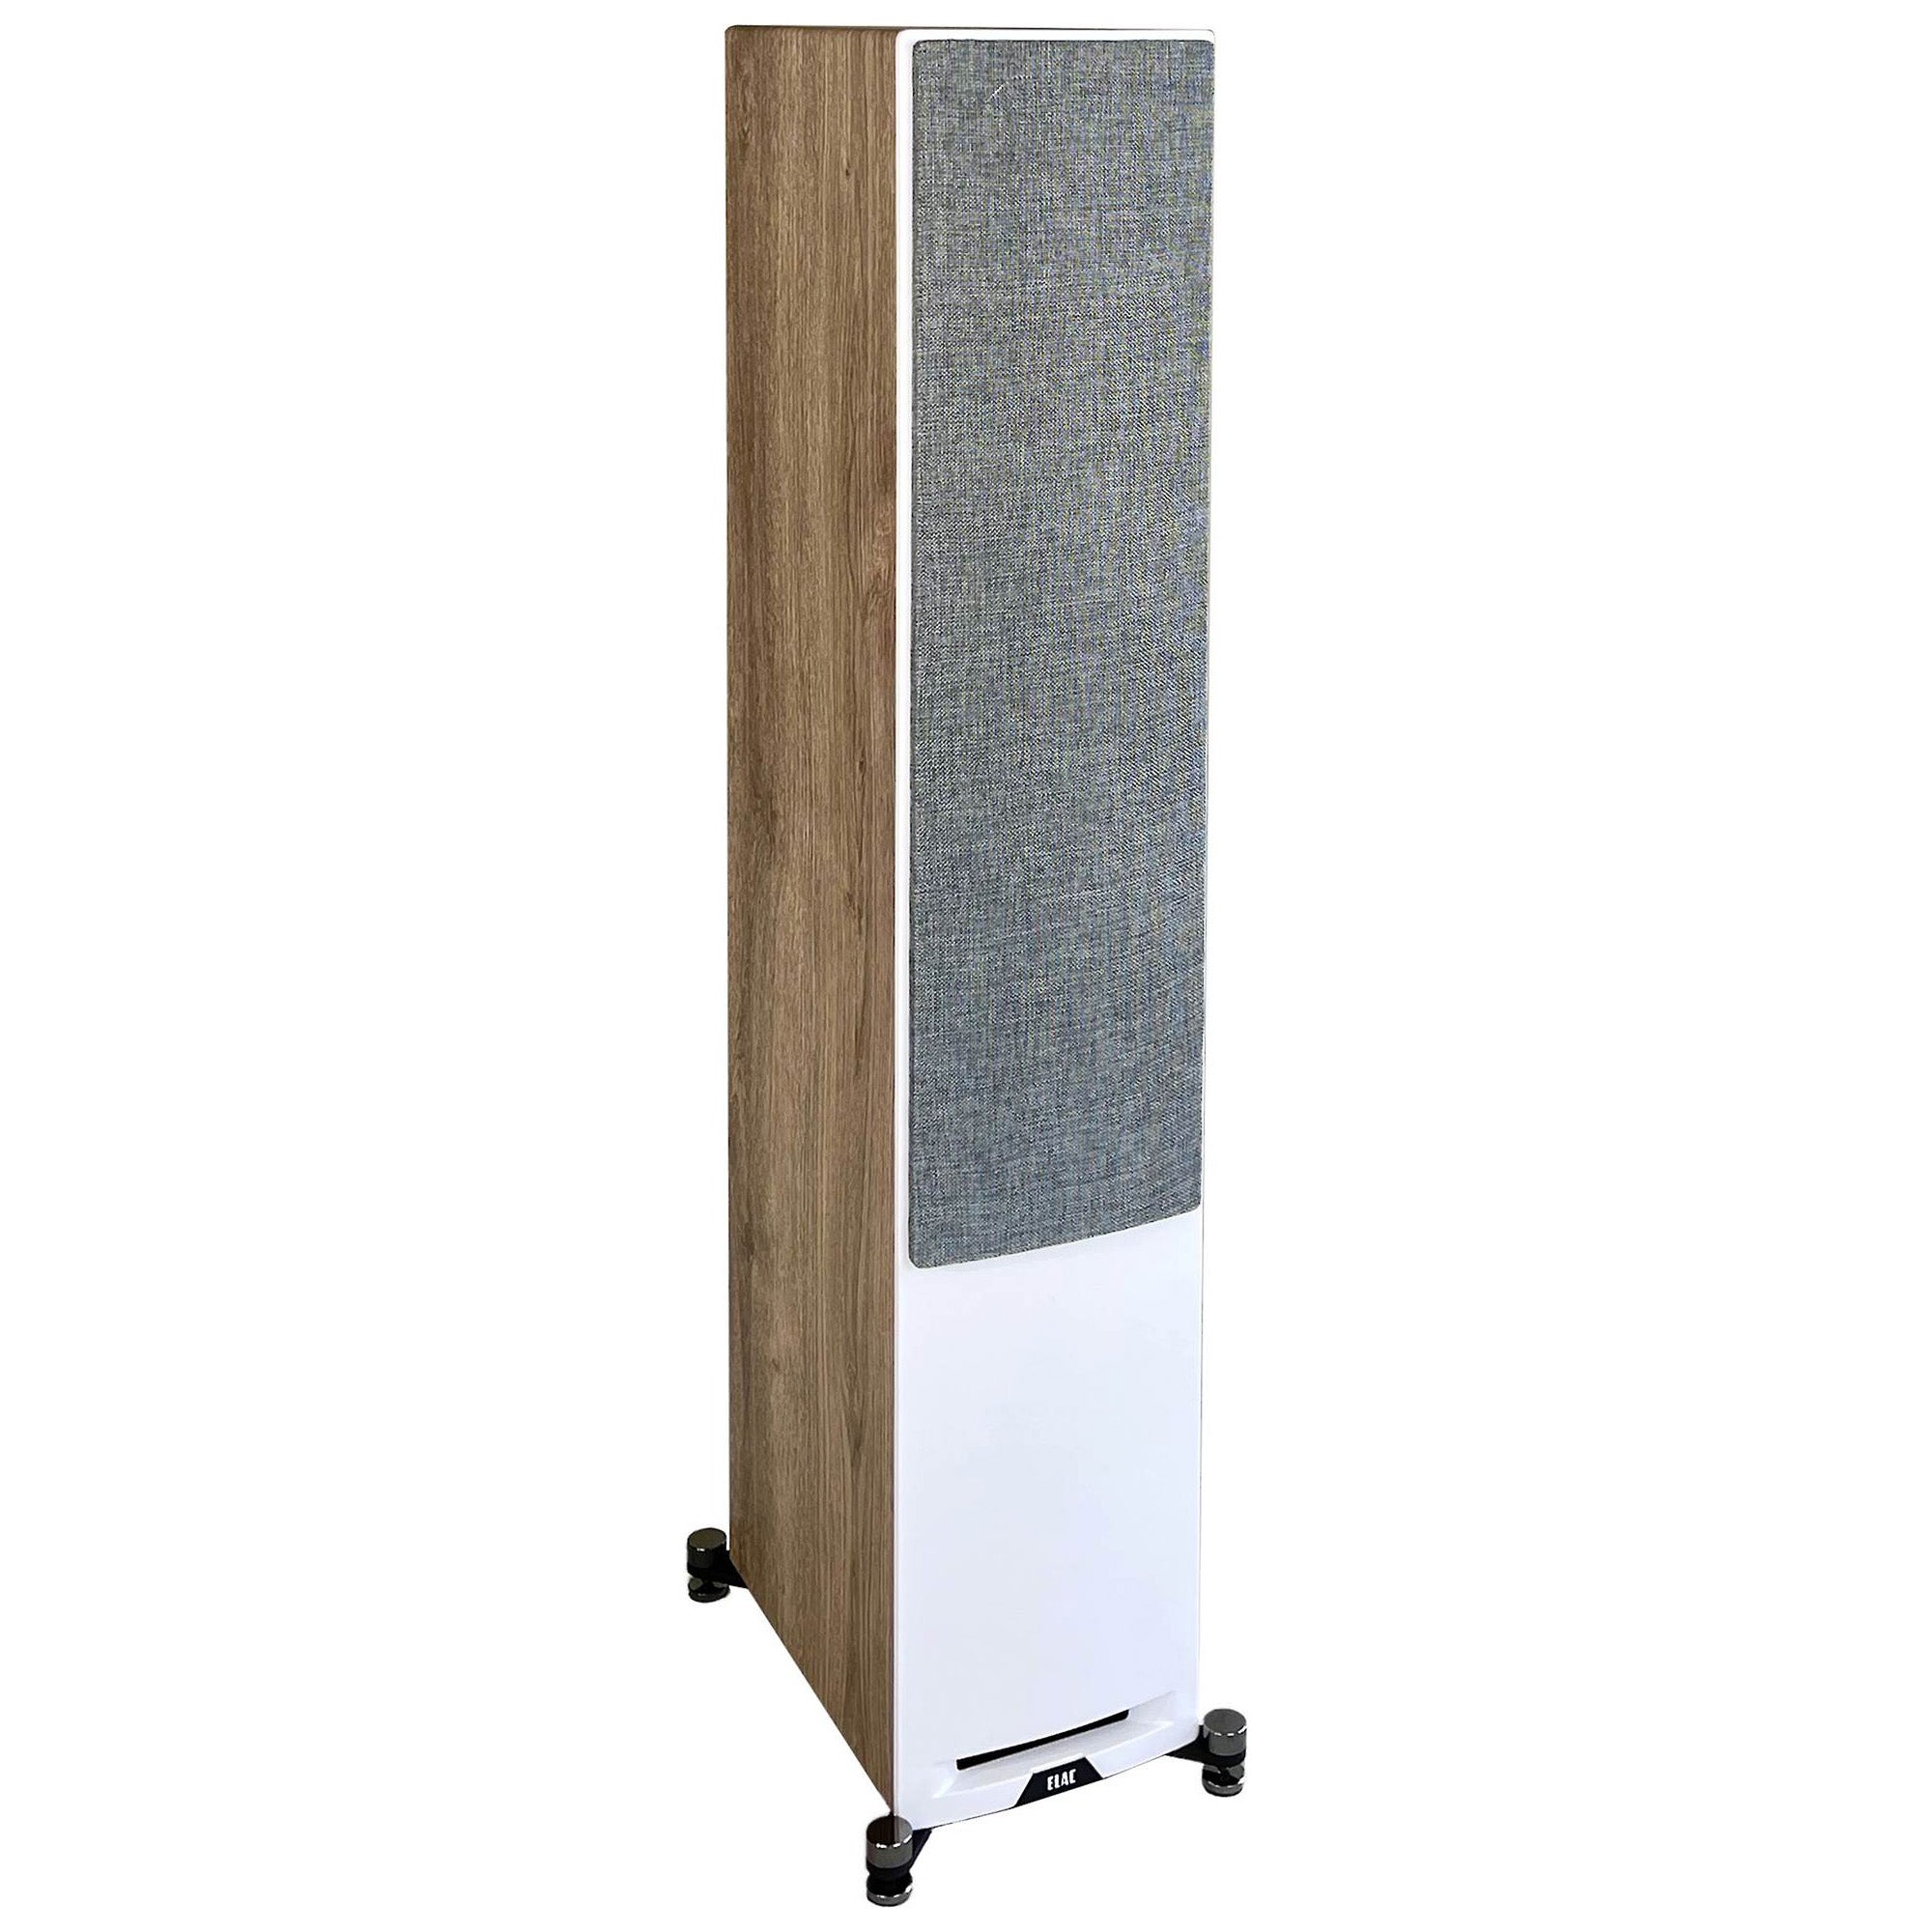 ELAC Uni-Fi Reference UFR52 Floorstanding Speakers (pair)